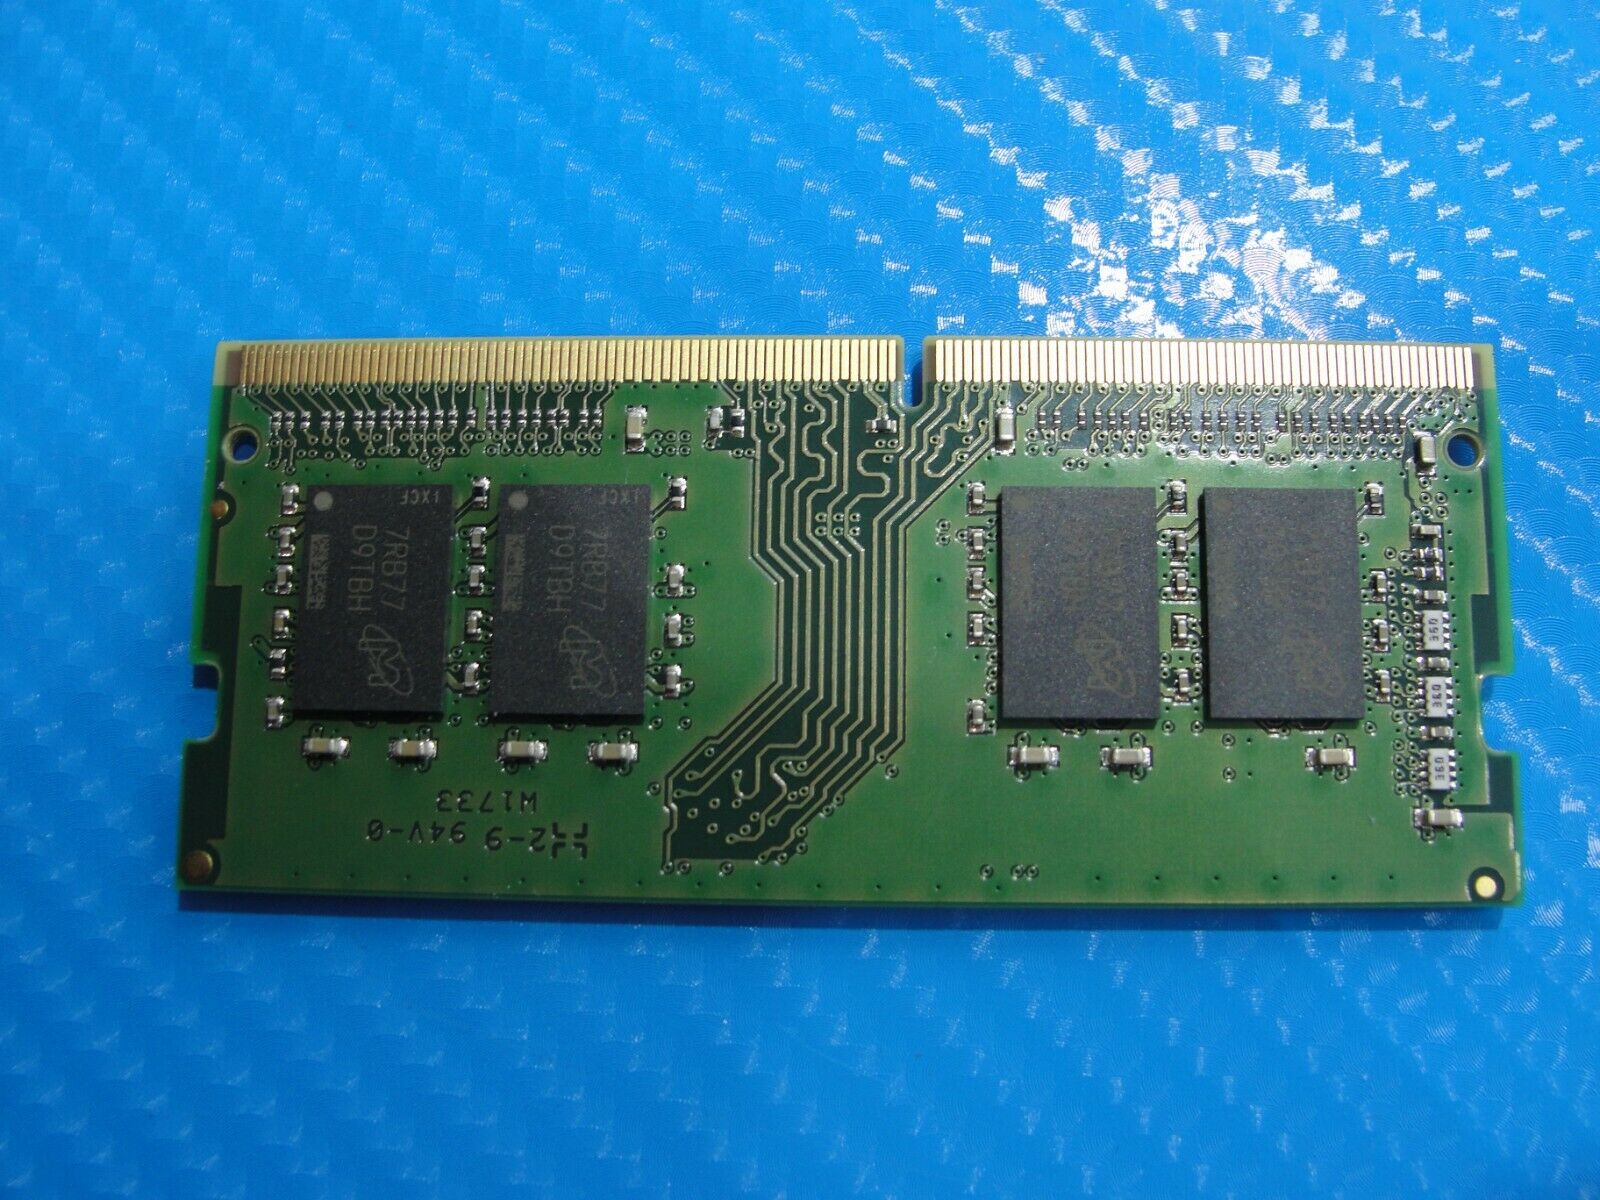 Dell 7480 Kingston 8Gb pc4-2400t SO-DIMM Memory RAM kmkyf9-mibk180111d0x 